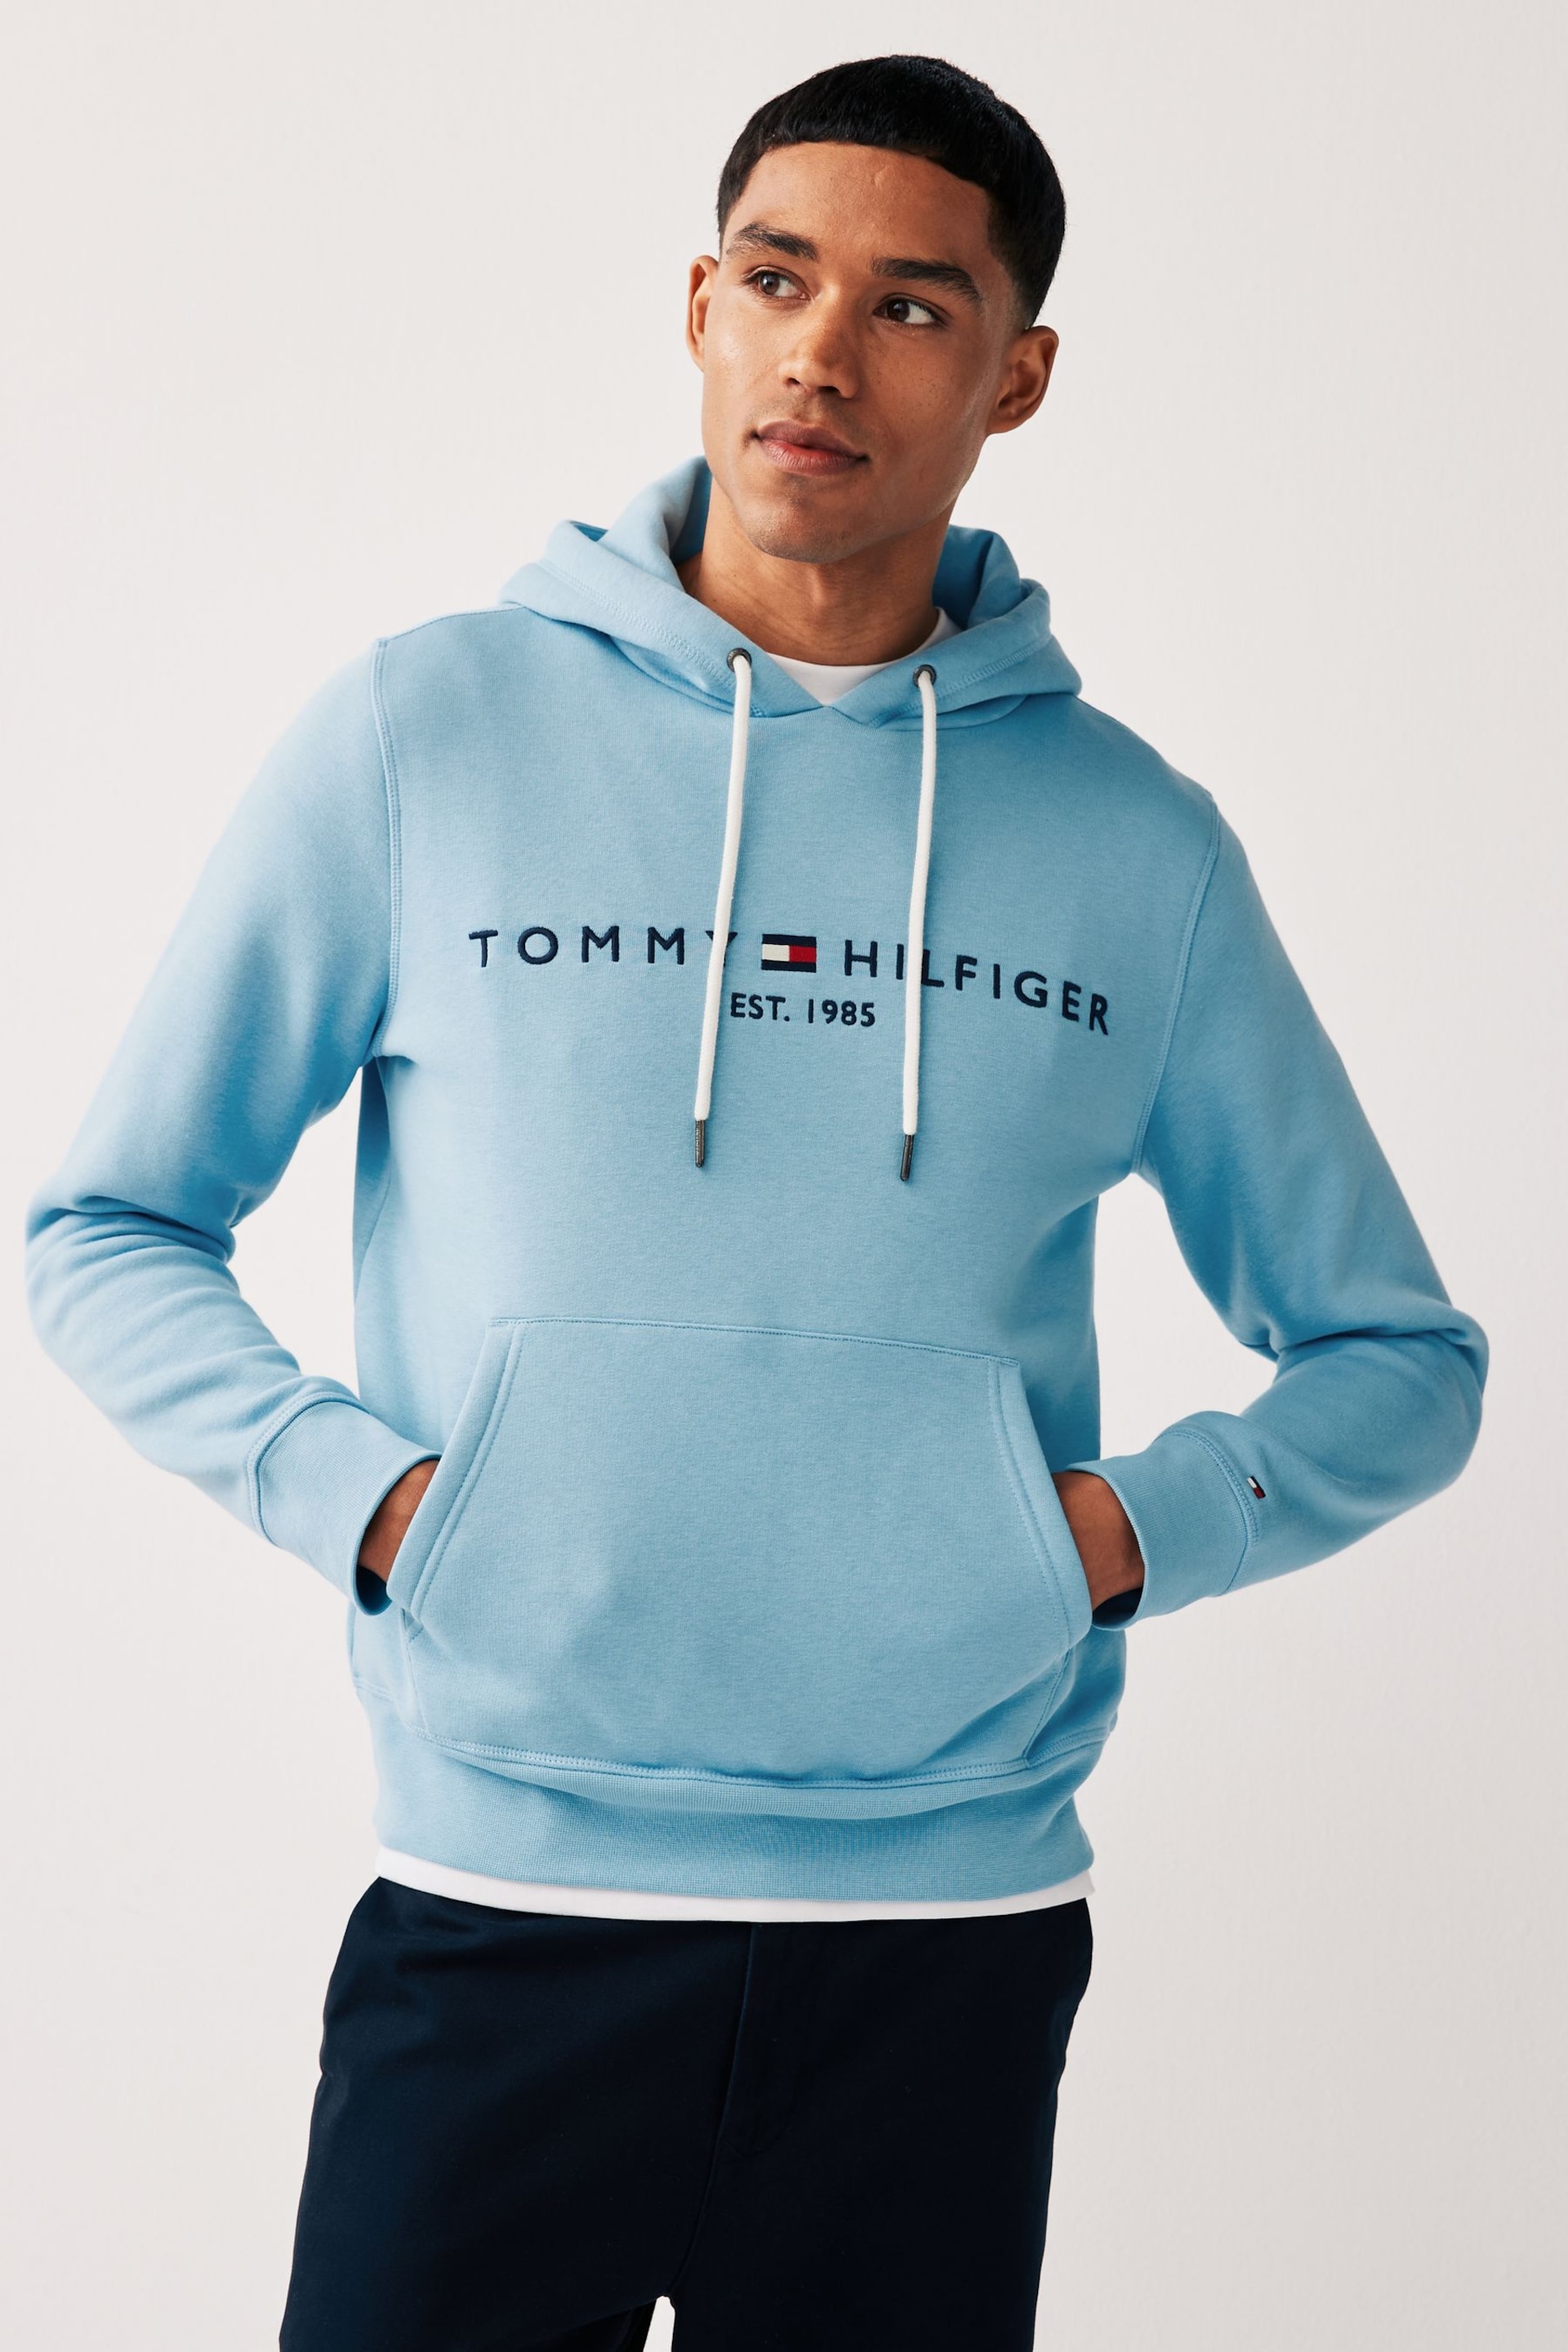 Tommy Hilfiger Blue Logo Hoodie - Image 1 of 4